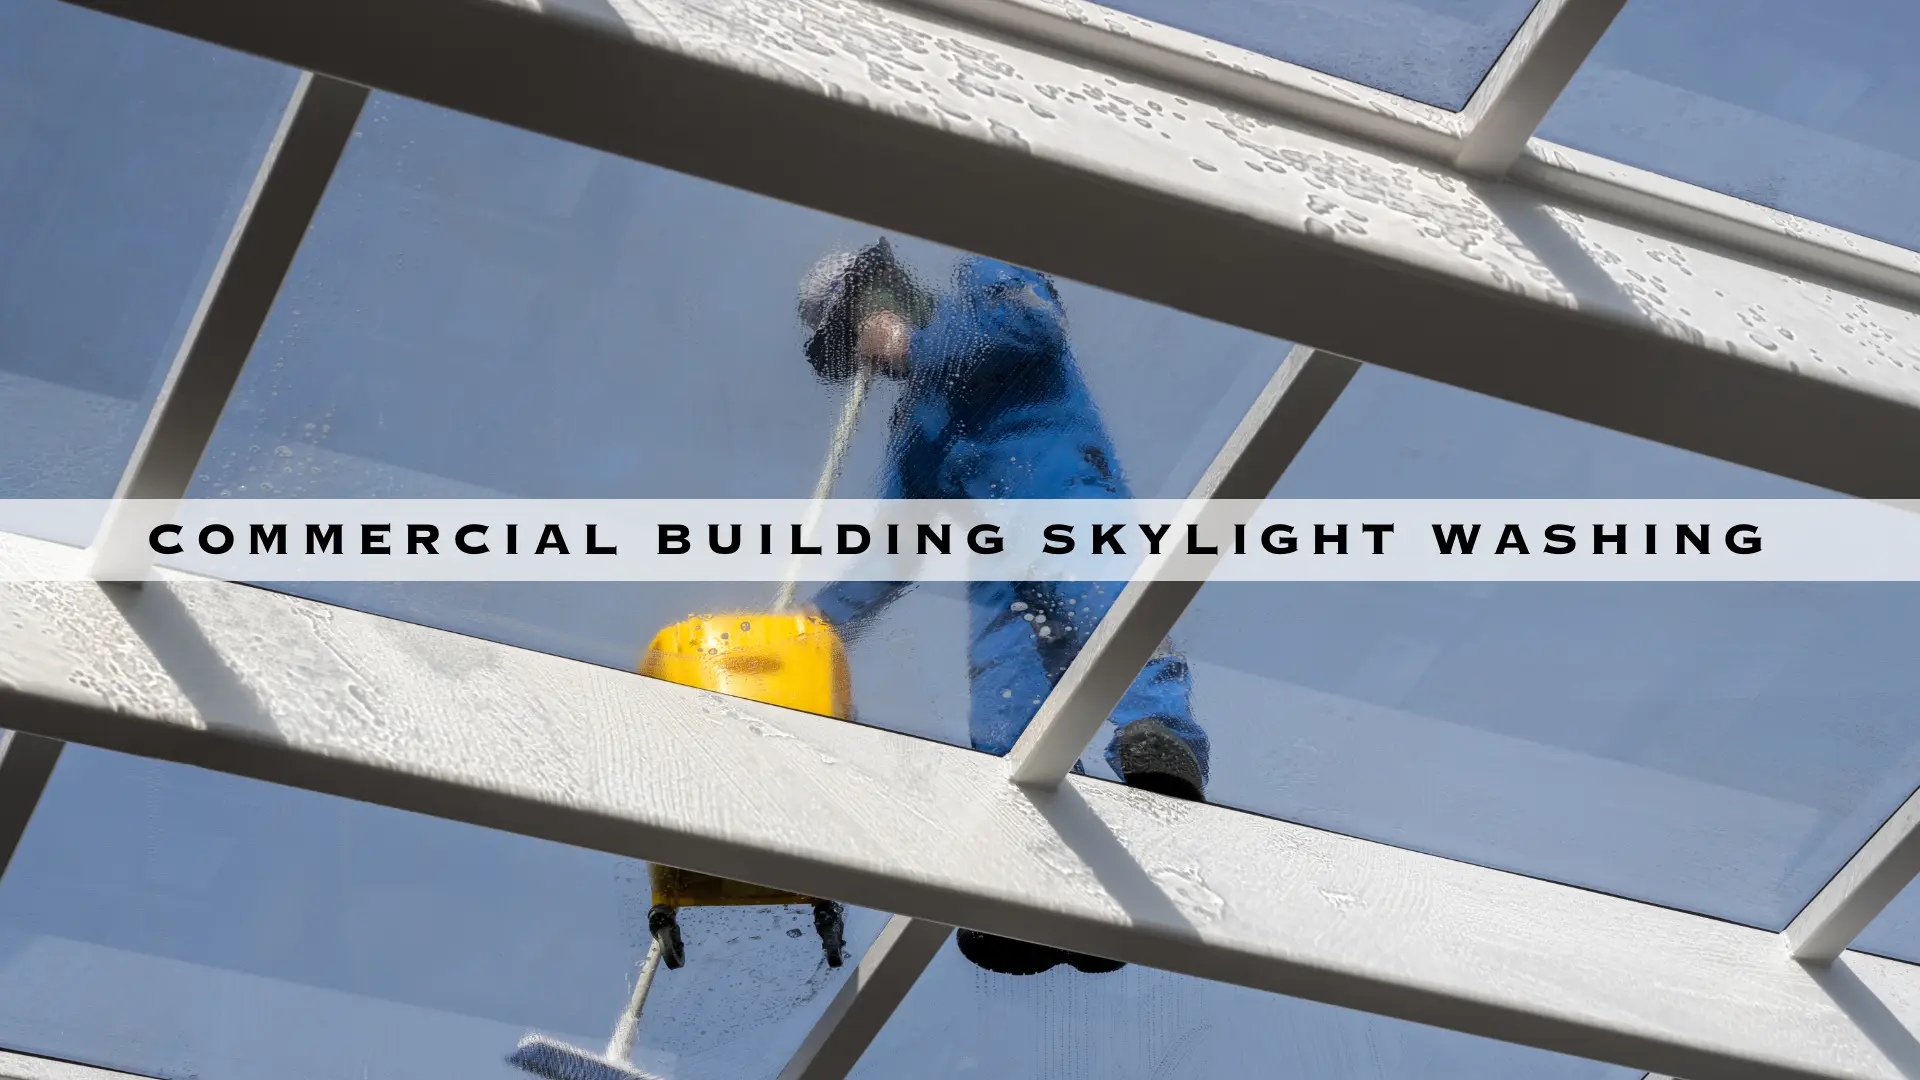 COMMERCIAL BUILDING SKYLIGHT WASHING - HERO DESKTOP